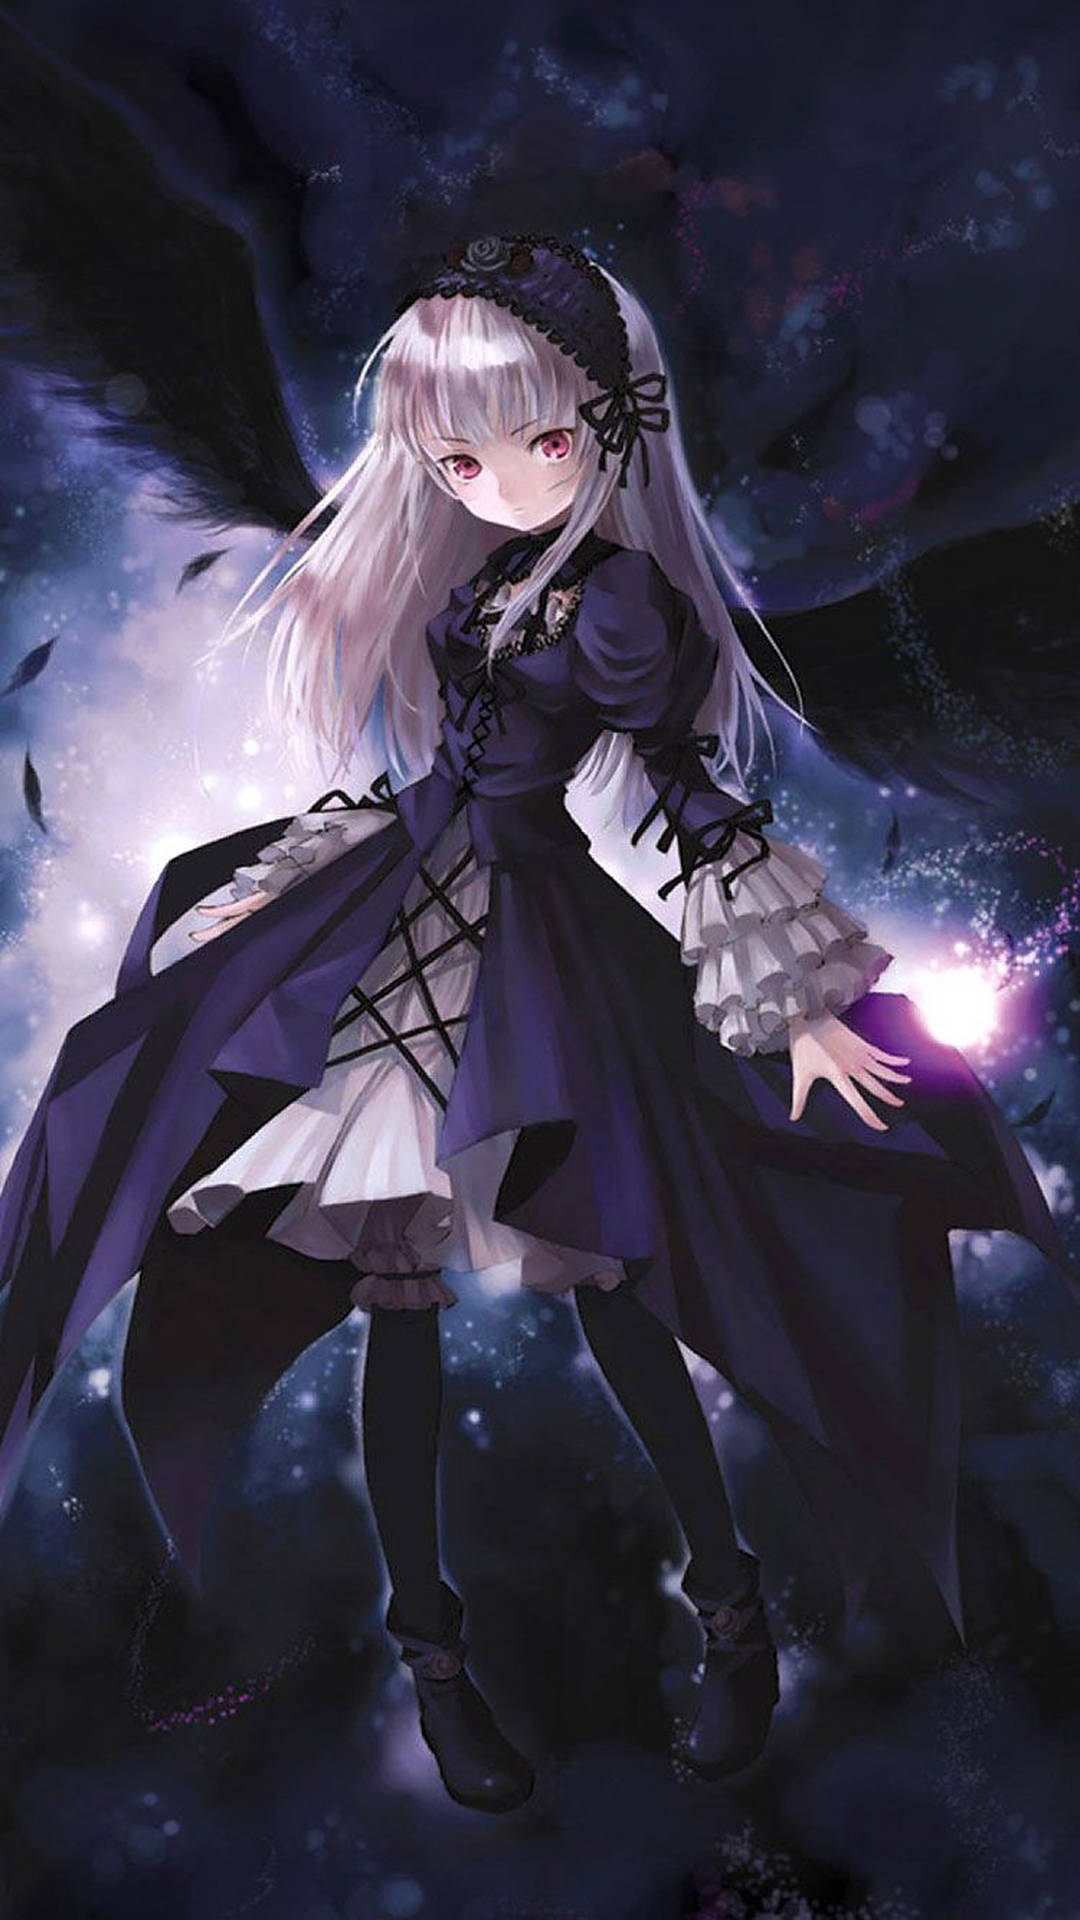 Dark girl anime IPhone wallpaper